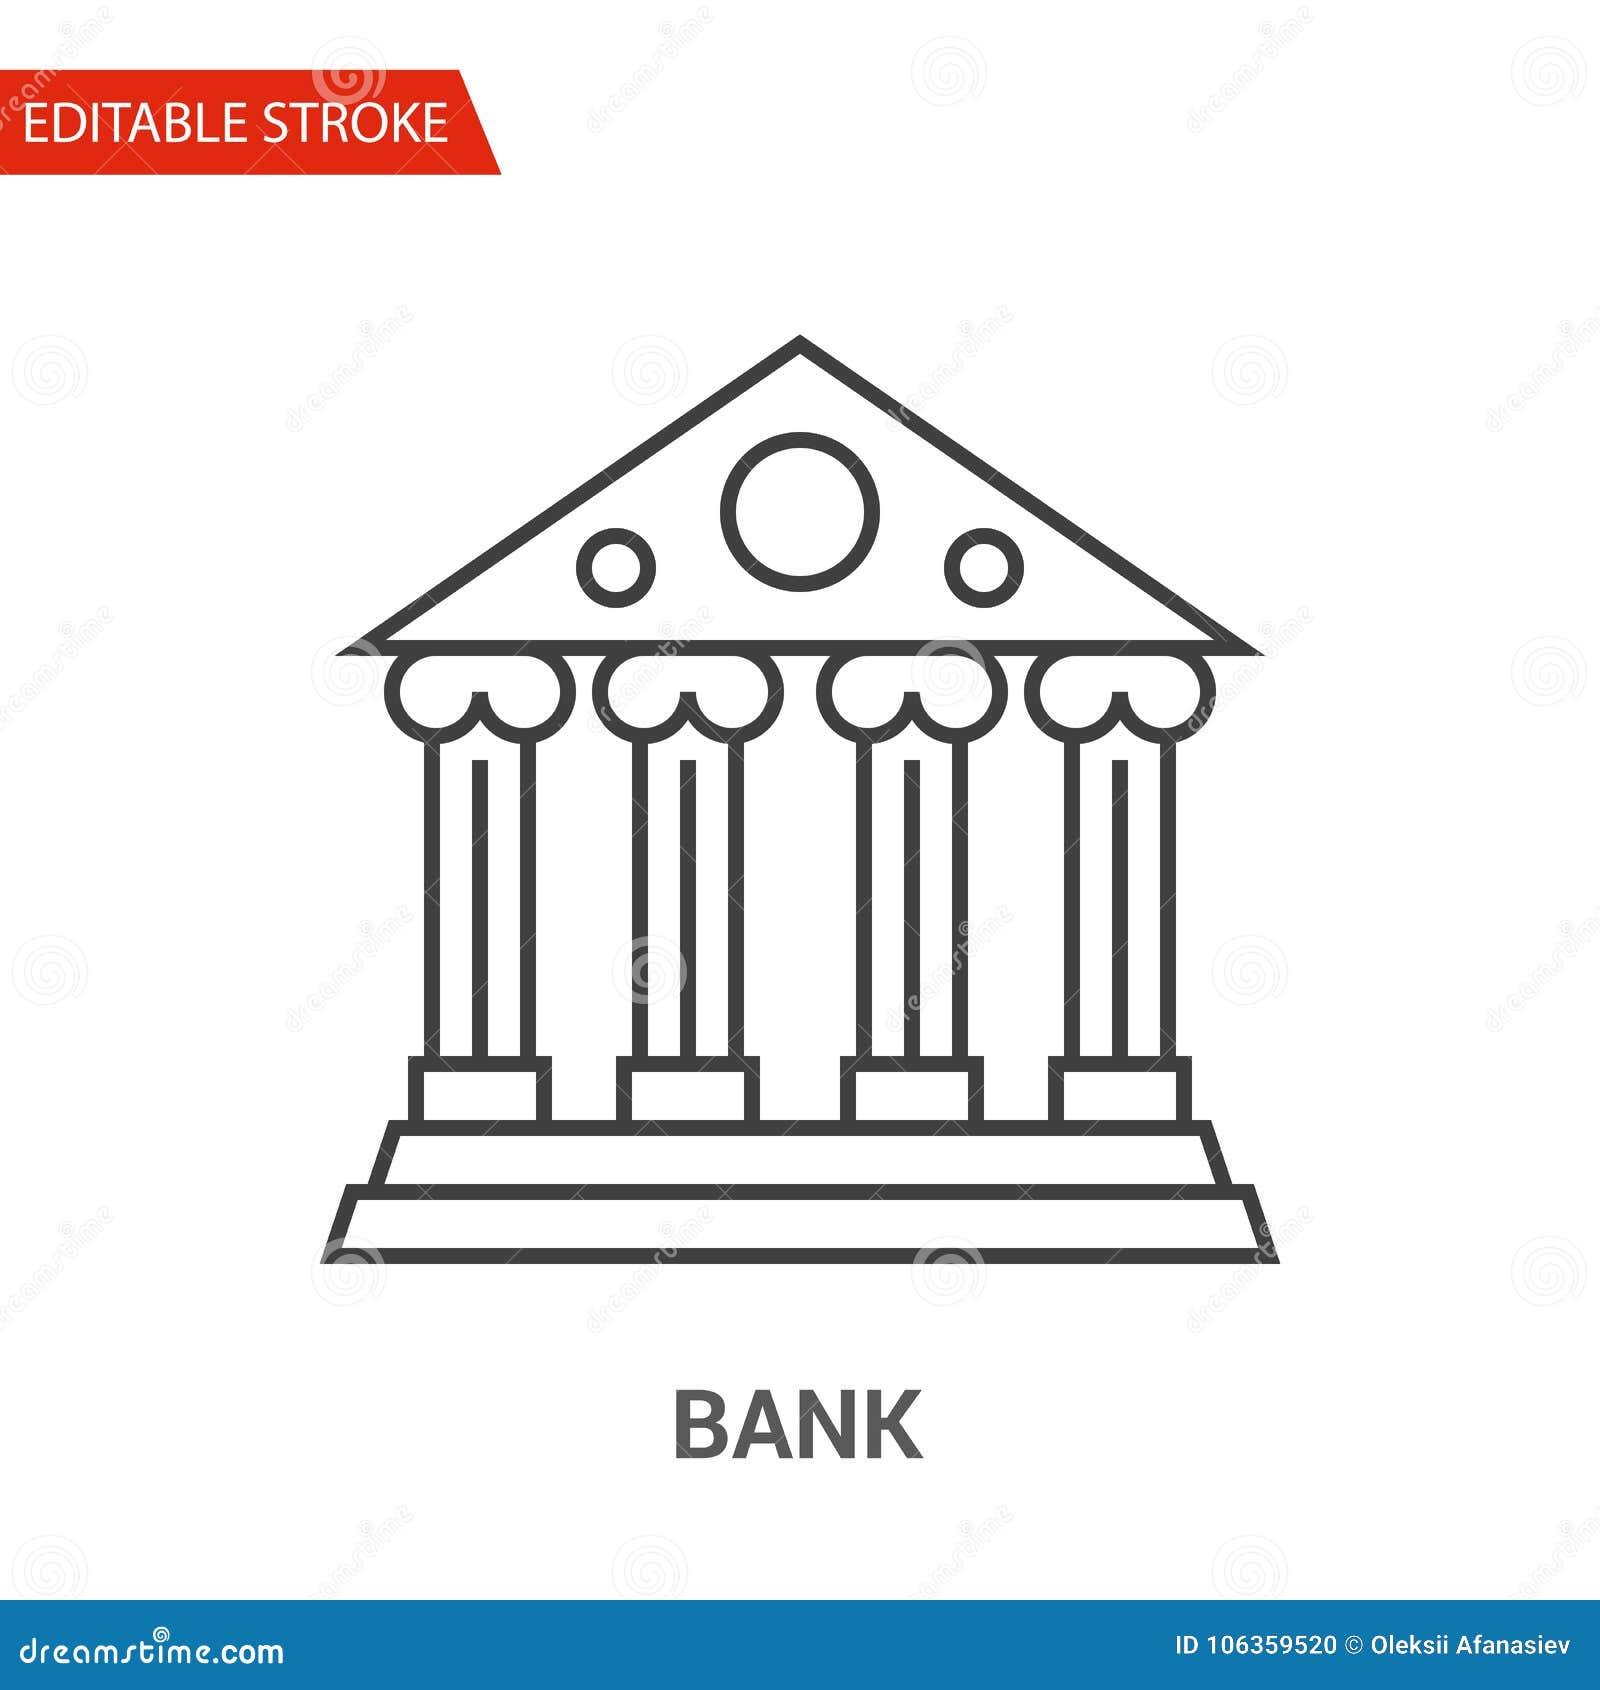 Bank Vault Sketch Vector Images (48)